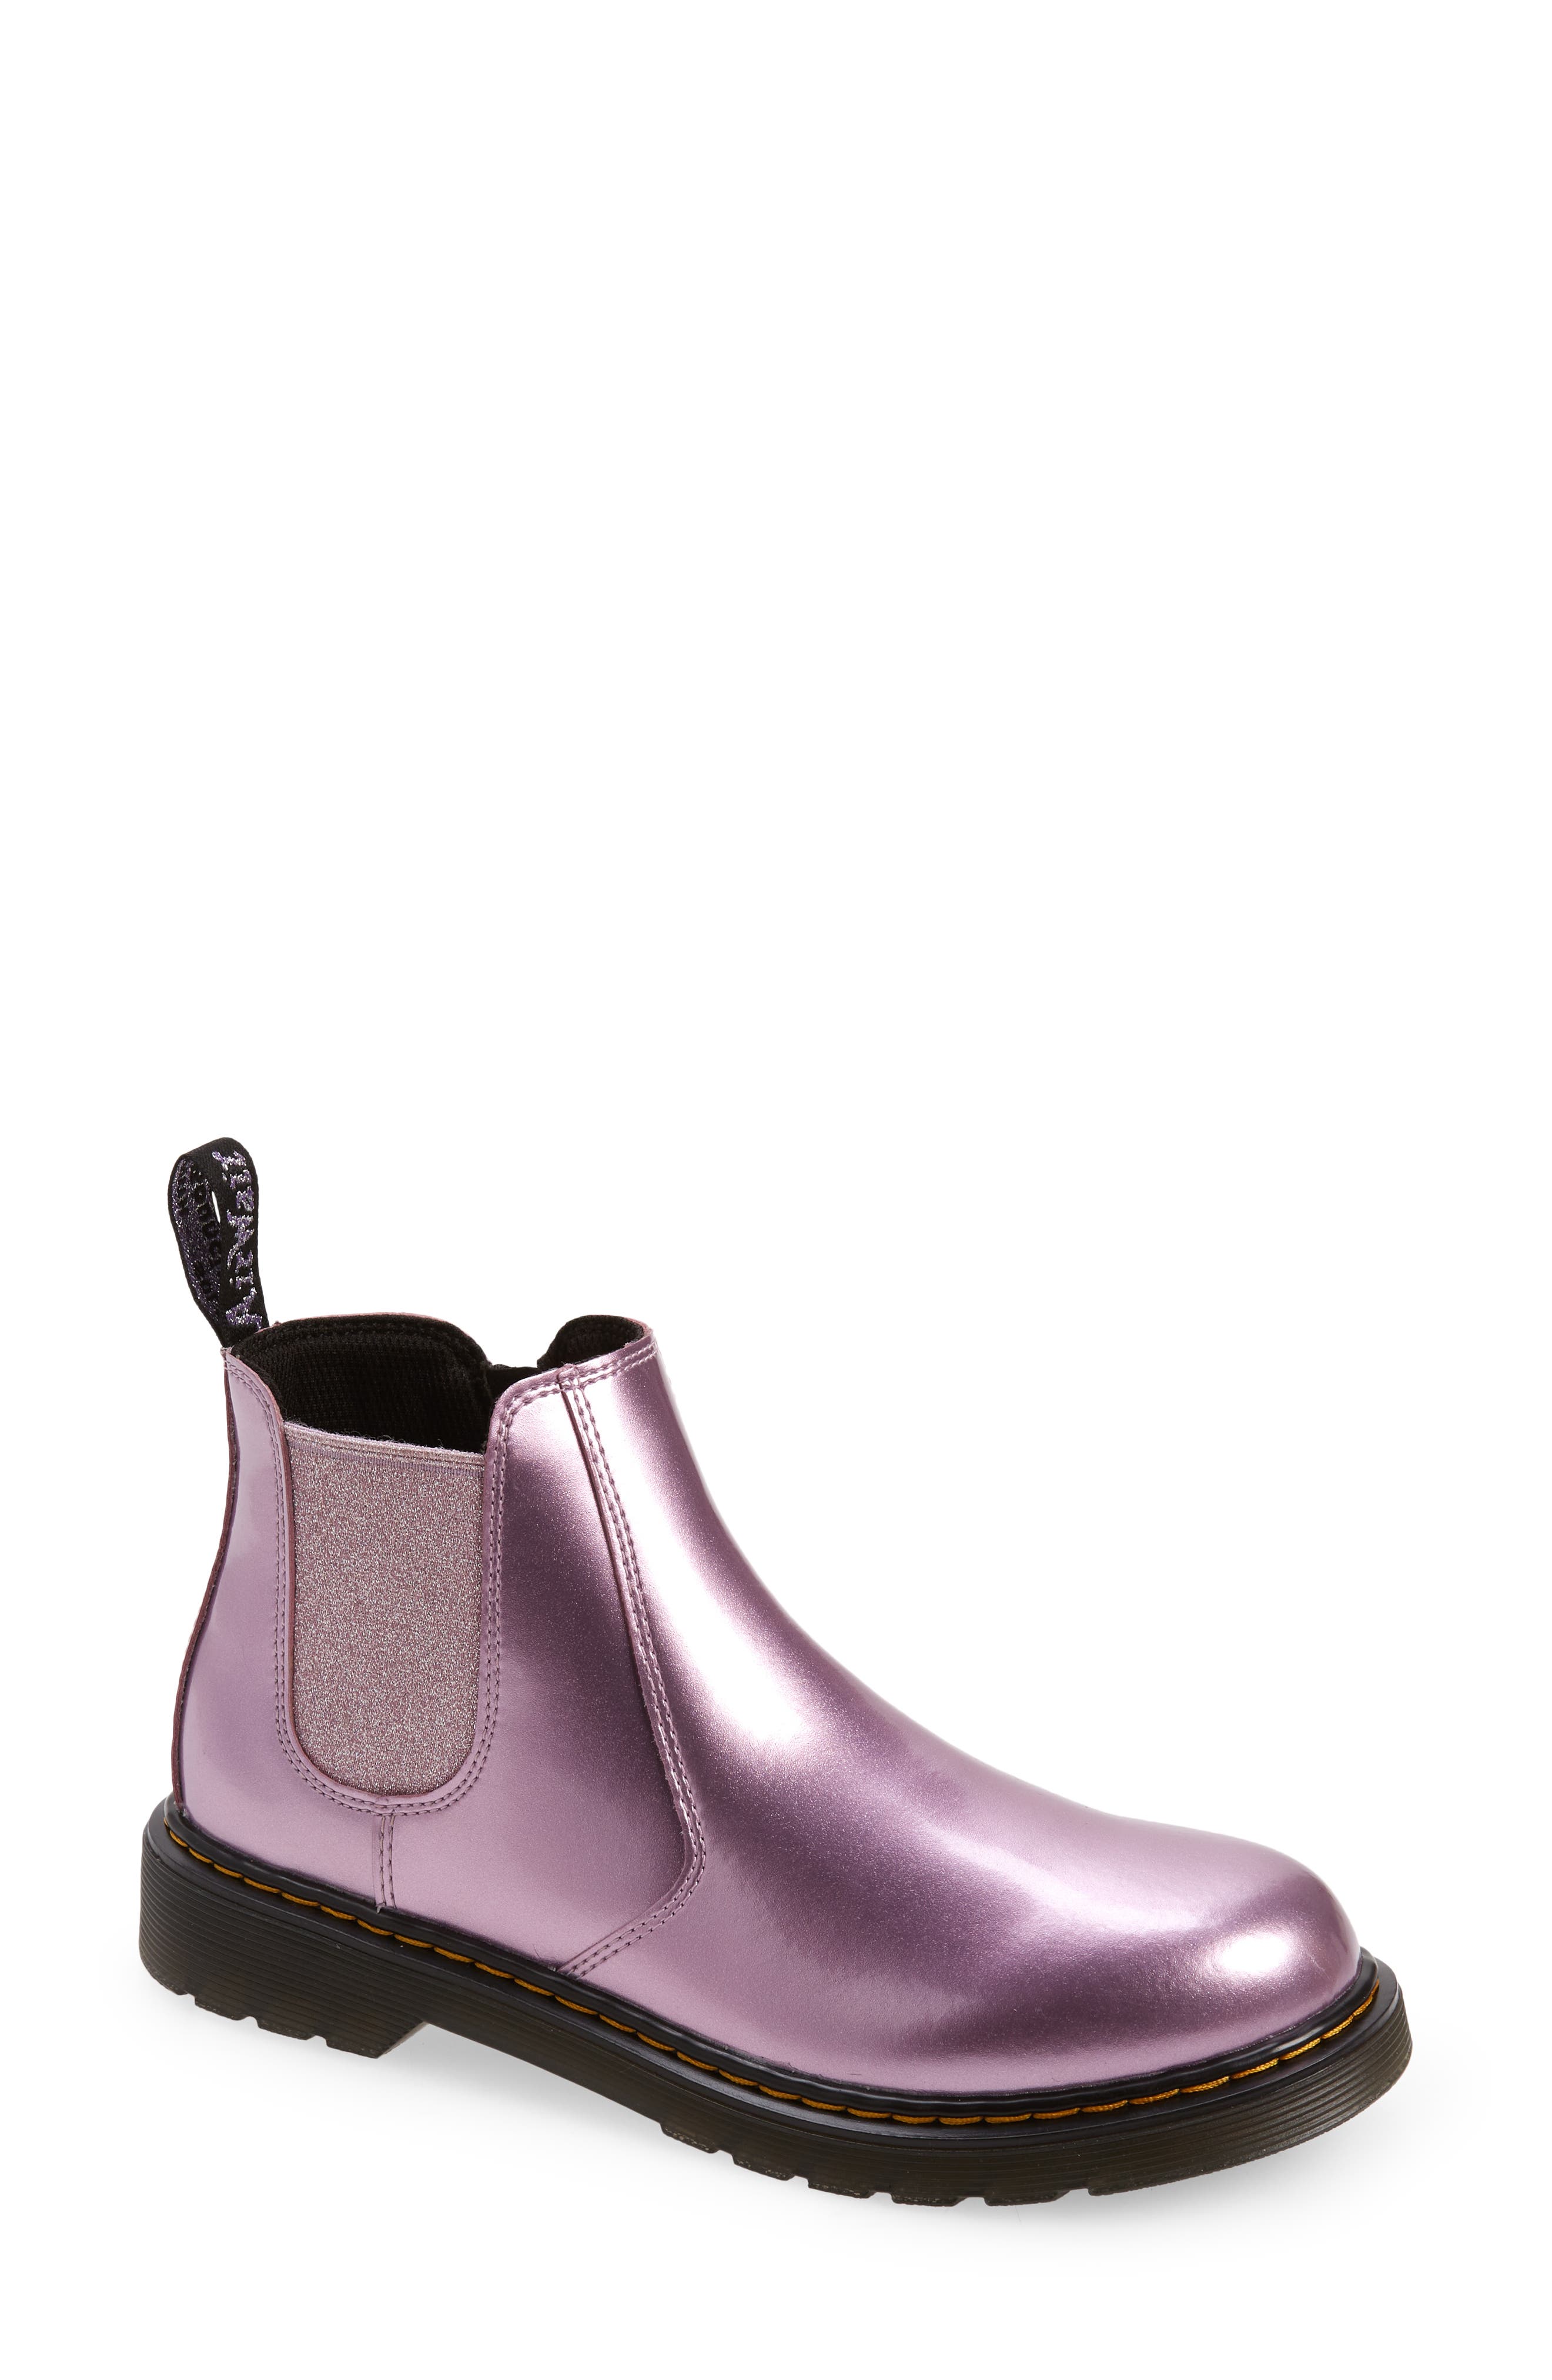 Dr. Martens 2976 Sparkle Chelsea Boot in Pink Lavender at Nordstrom, Size 5 Us